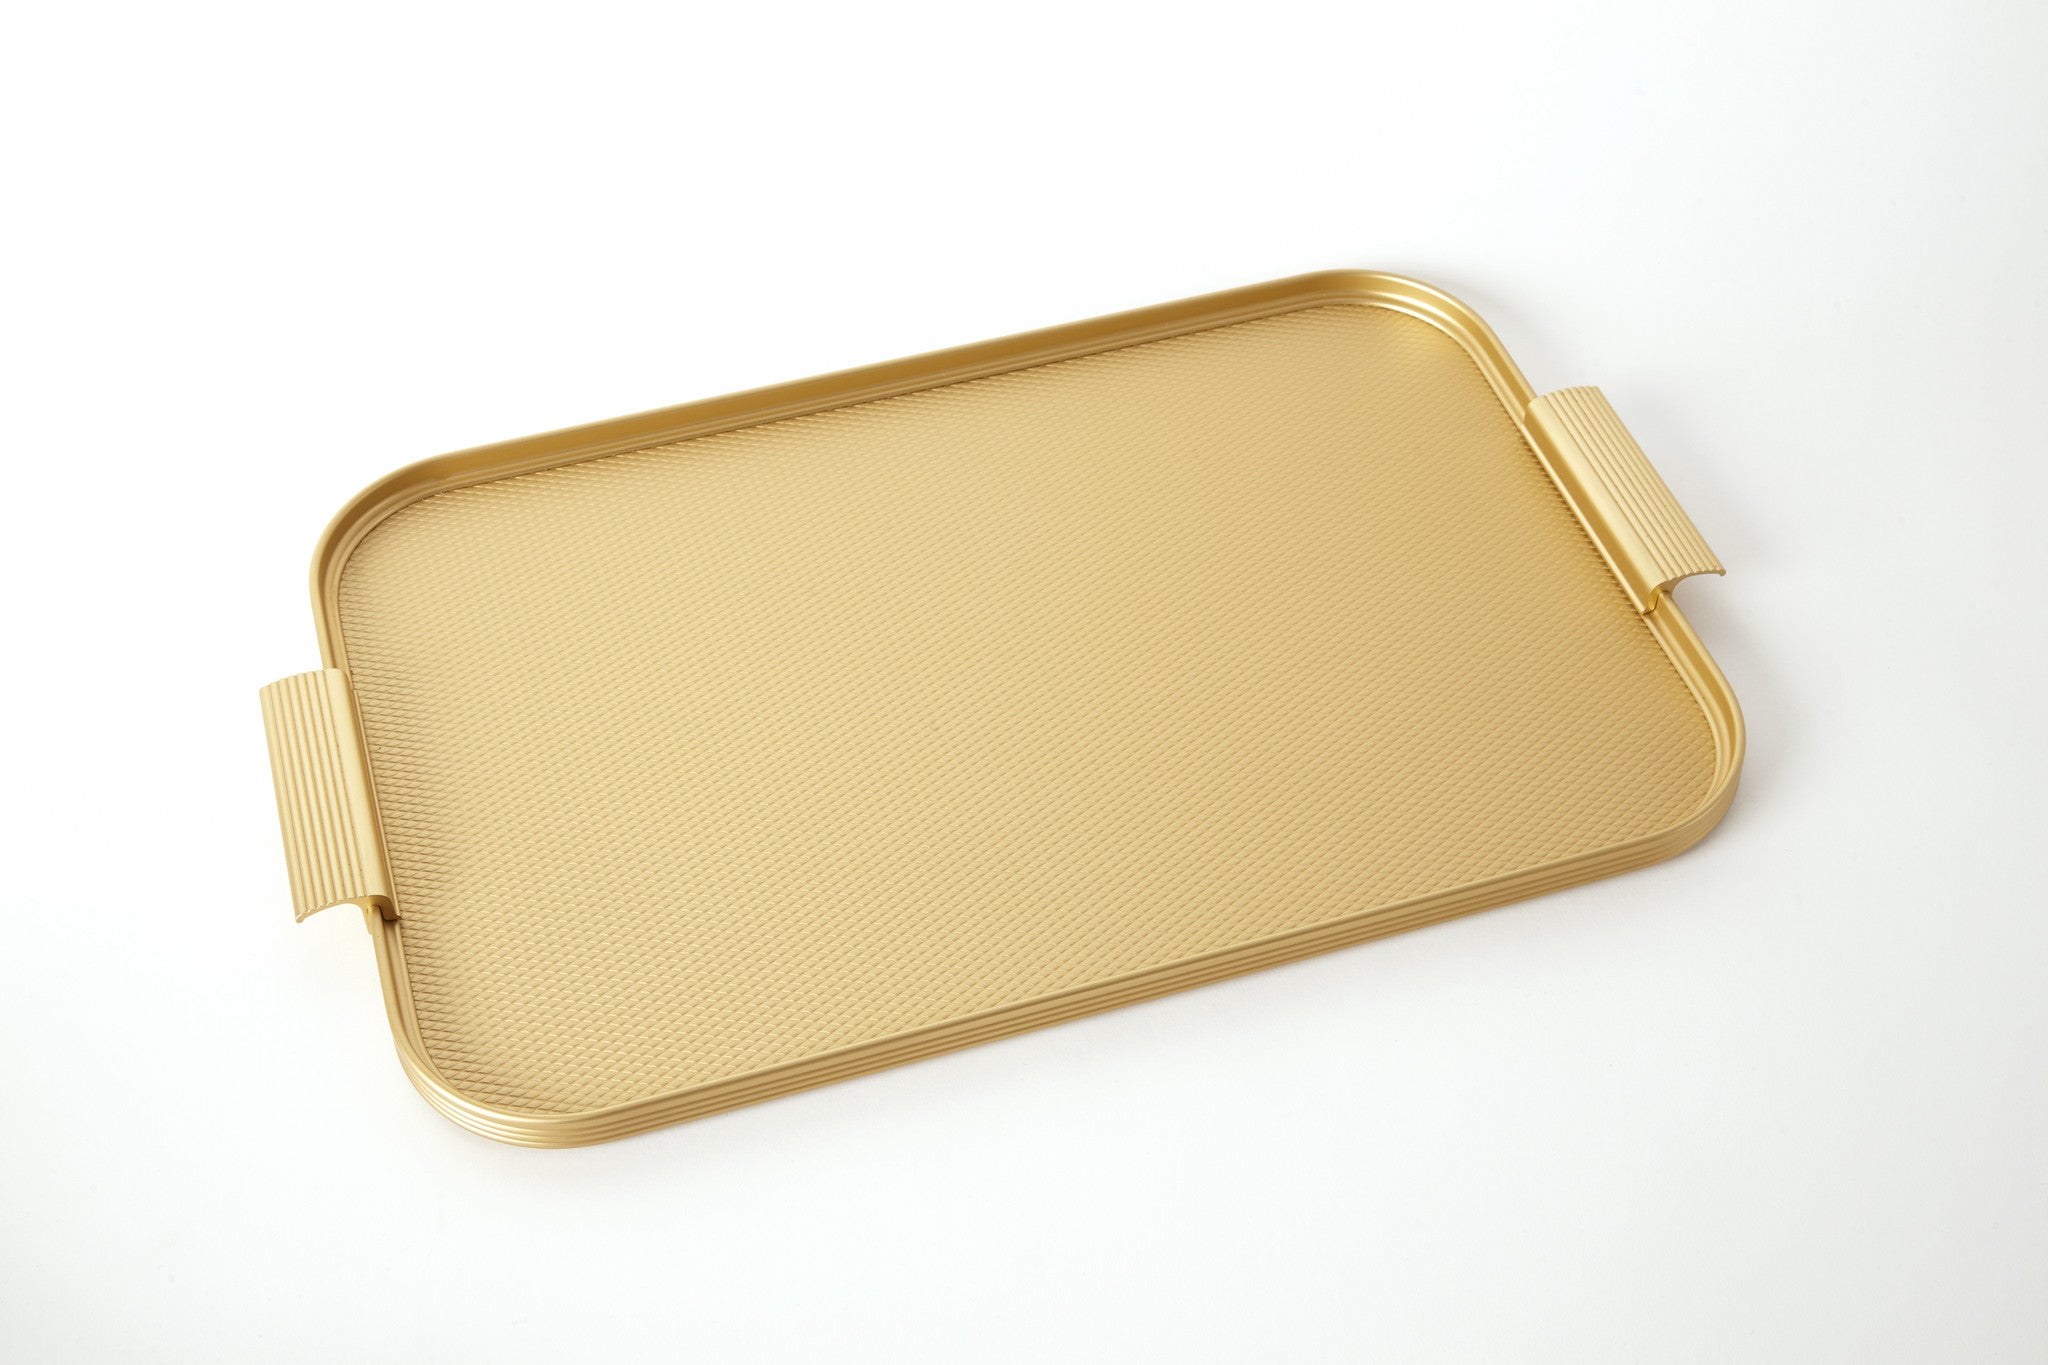 SKY TP01 -  Andoised Gold Celebration Trays Small Size - Tirupputu Thattu